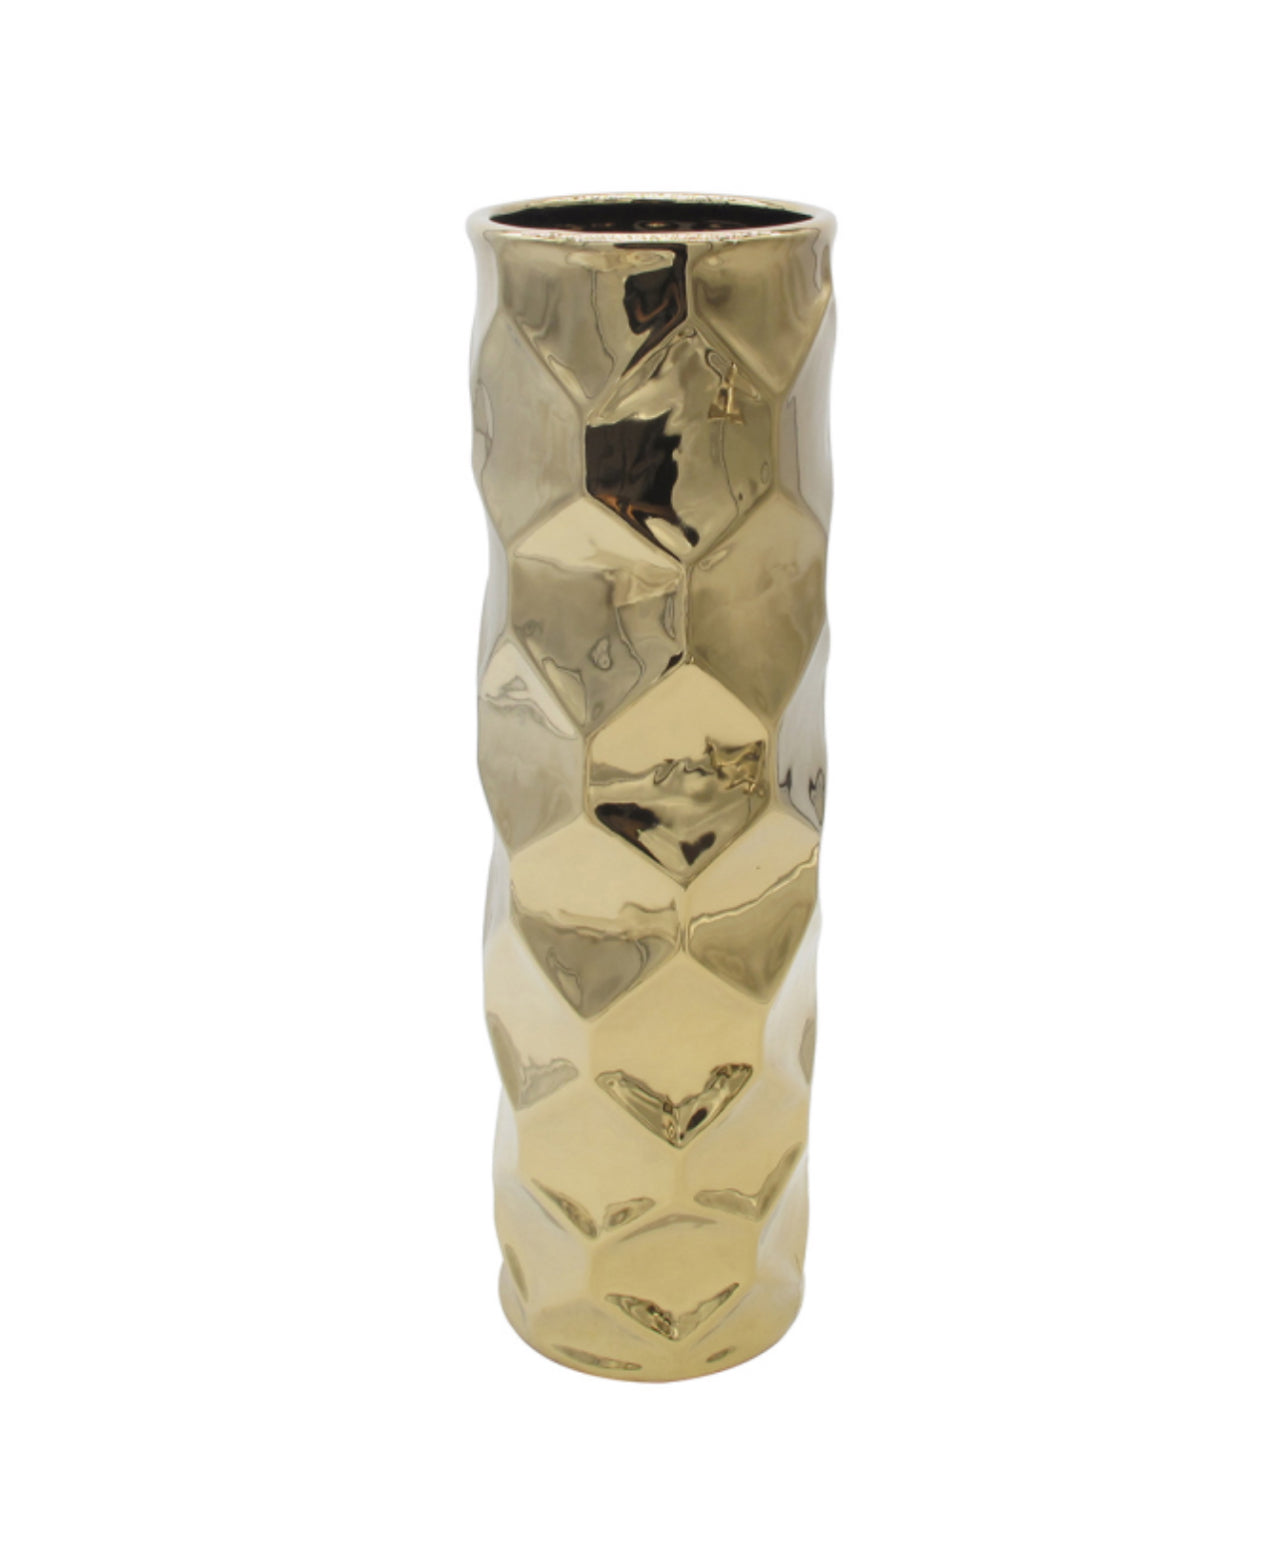 40cm Gold Hexagon Design Vase